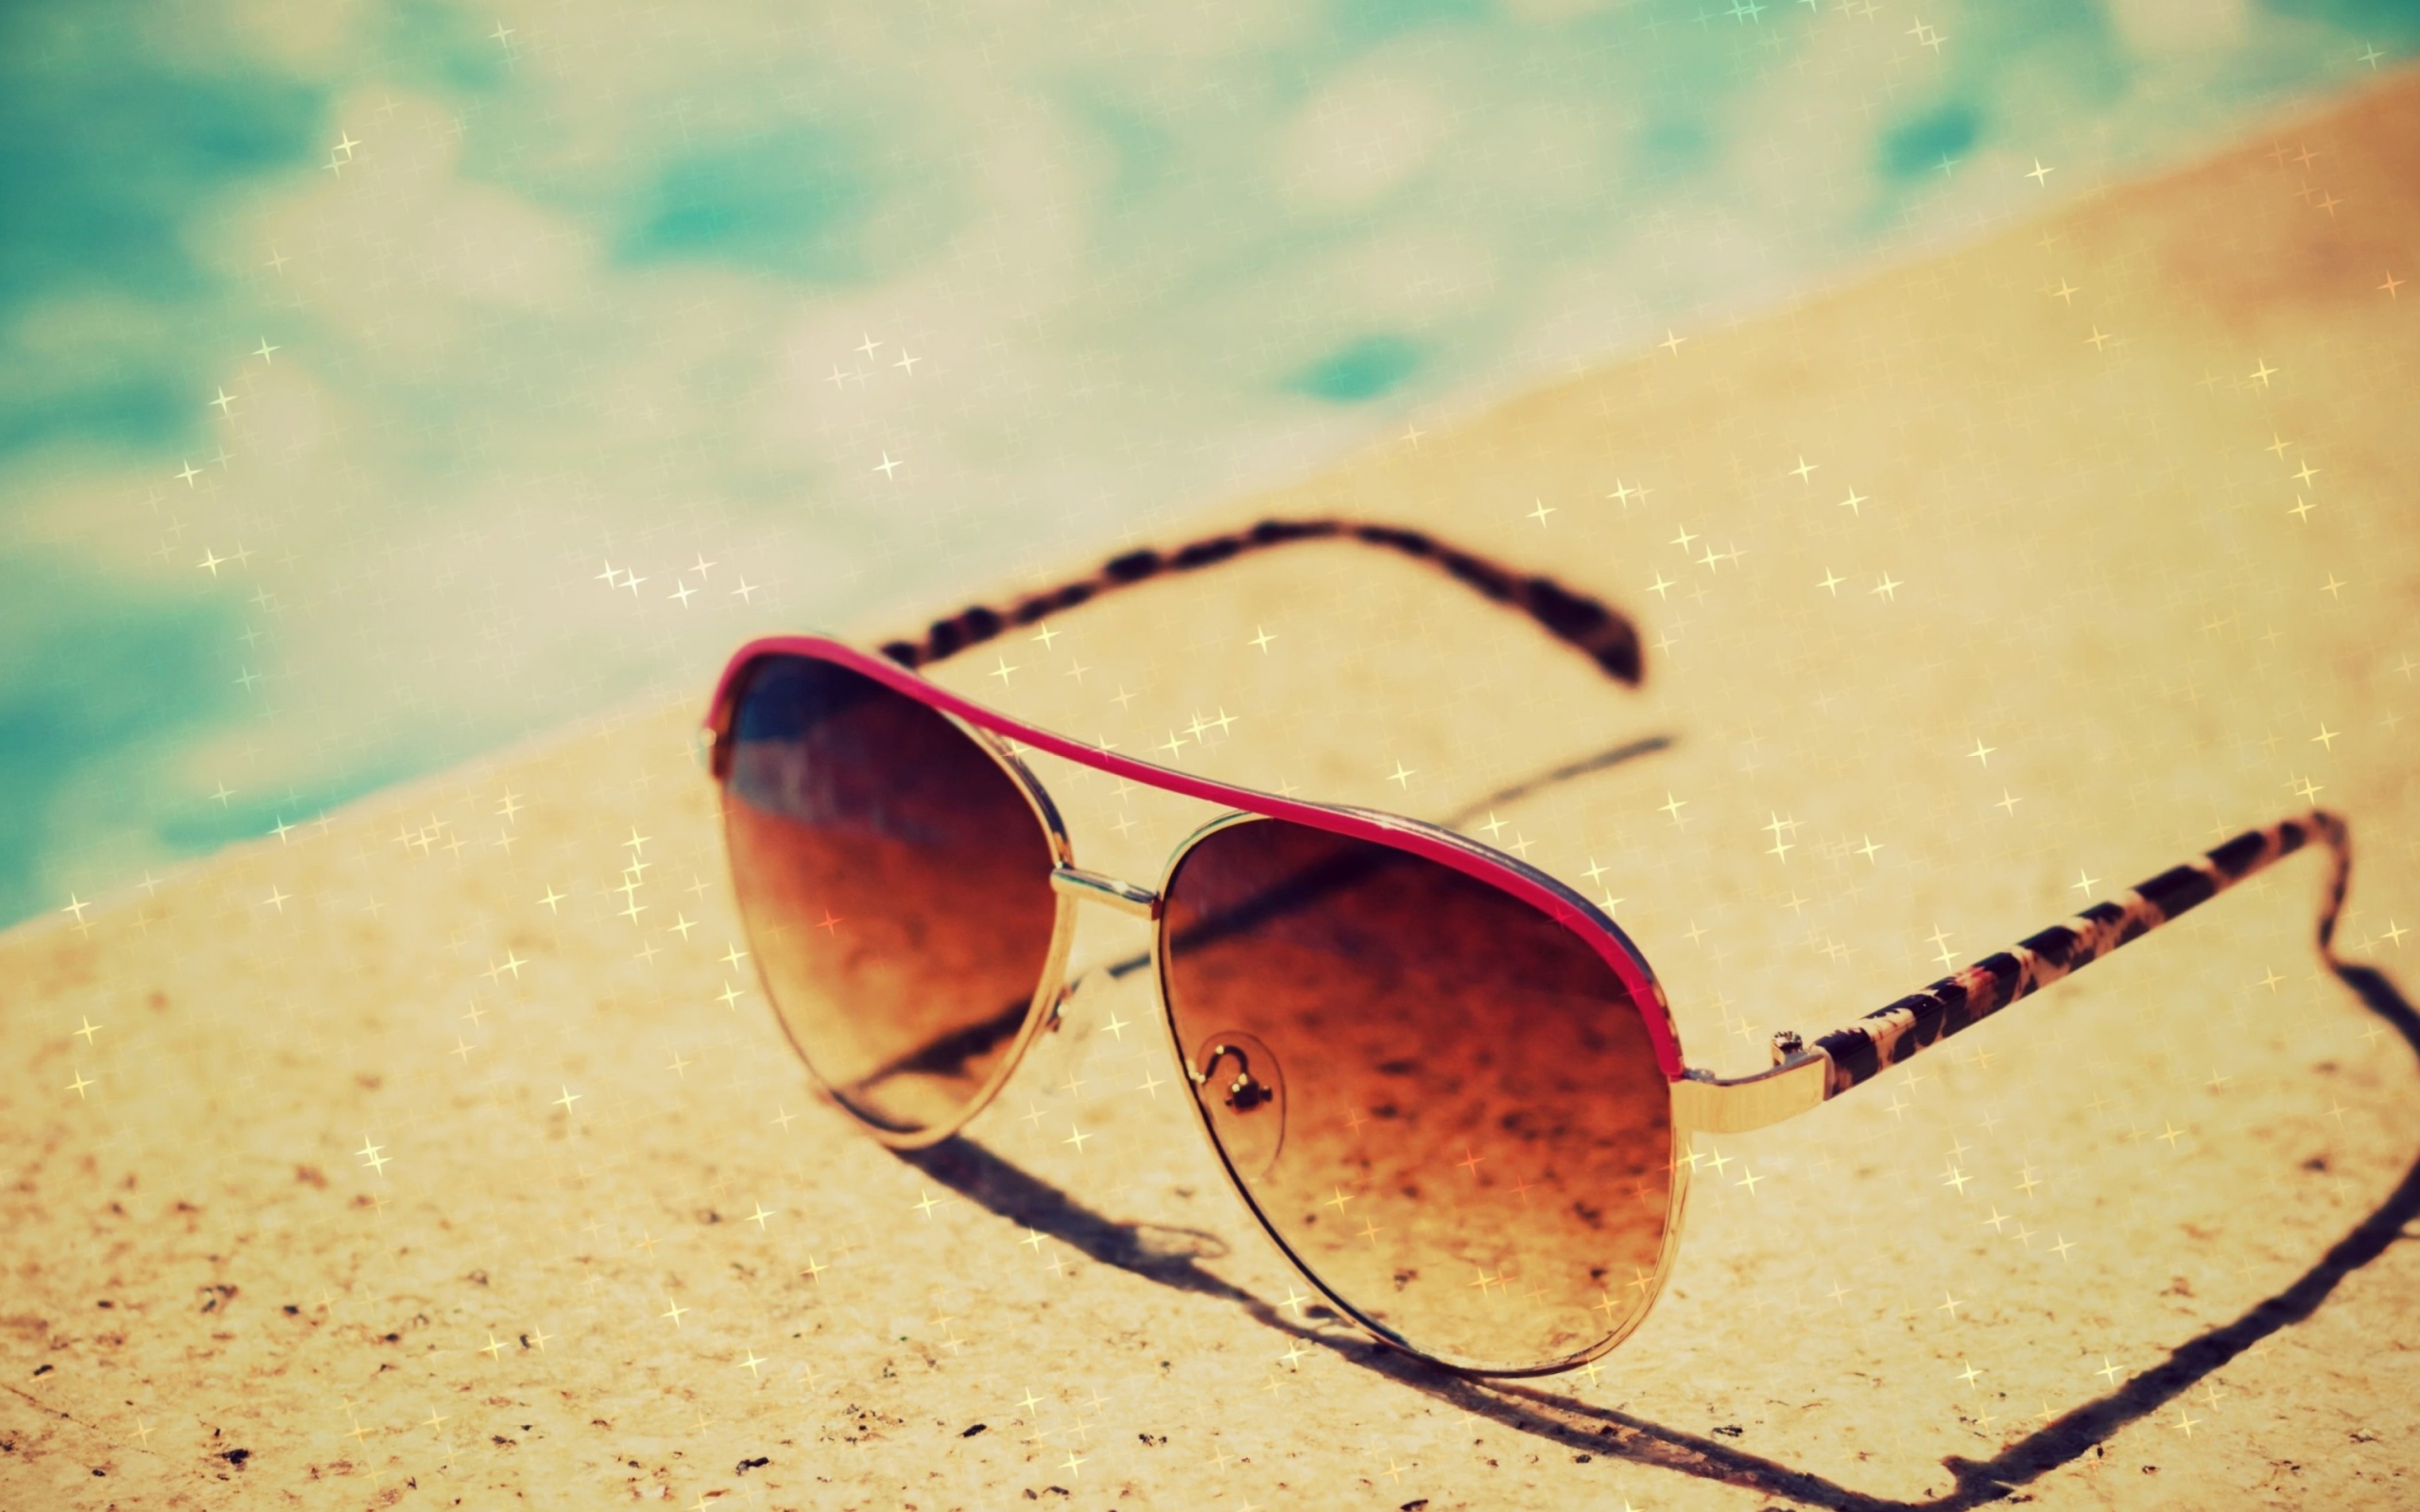 Sunglasses By Pool wallpaper 2560x1600